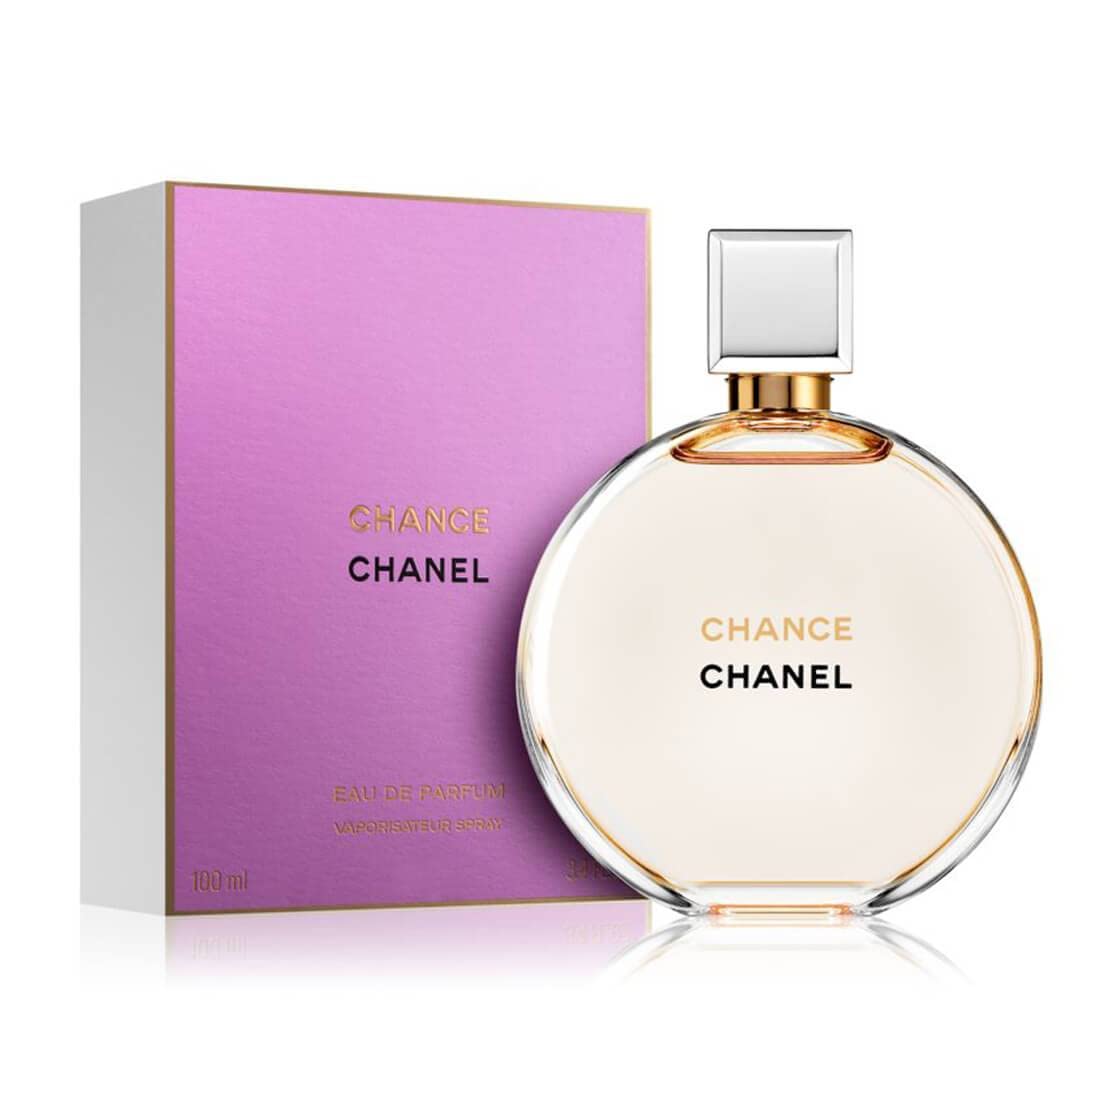 Chanel No 5 EDP 200ml - Timeless Women's Perfume, D'SCentsation